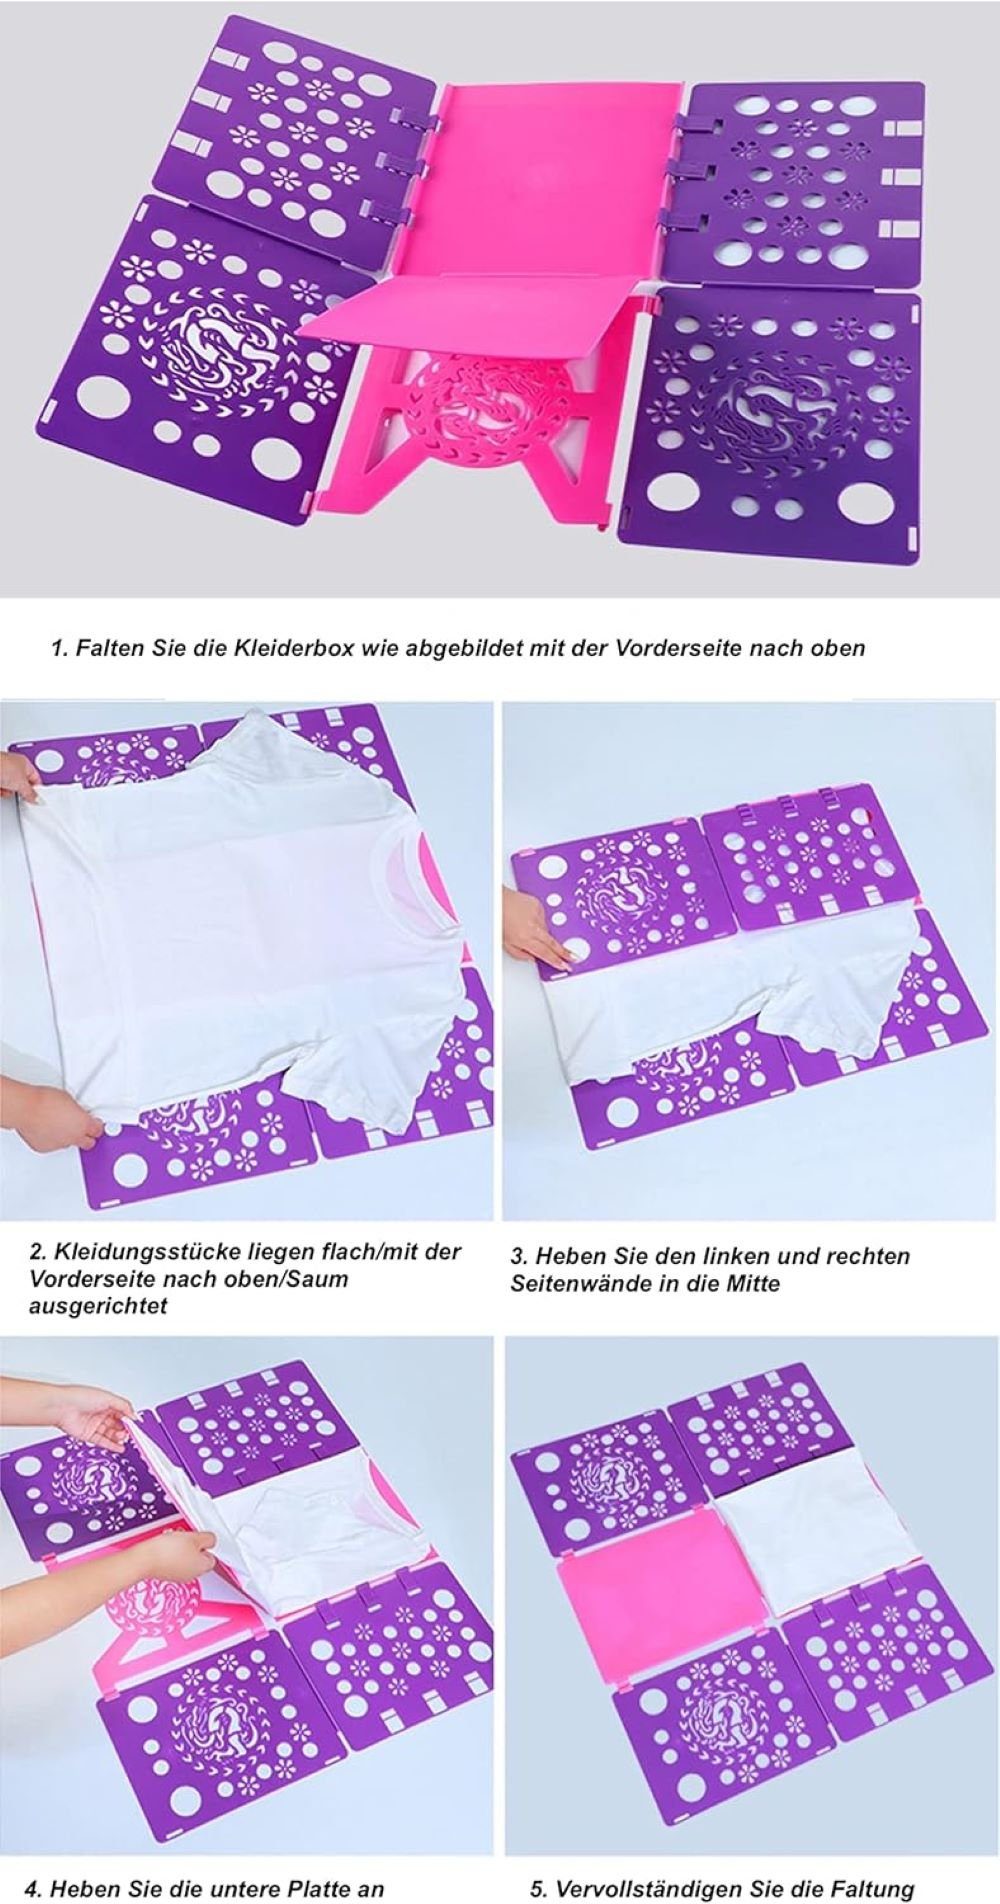 Faltbrett Hosen Hemden Pullover Wäschesortierer Falthilfe Pink/Lila Wäsche Verstellbar RHP